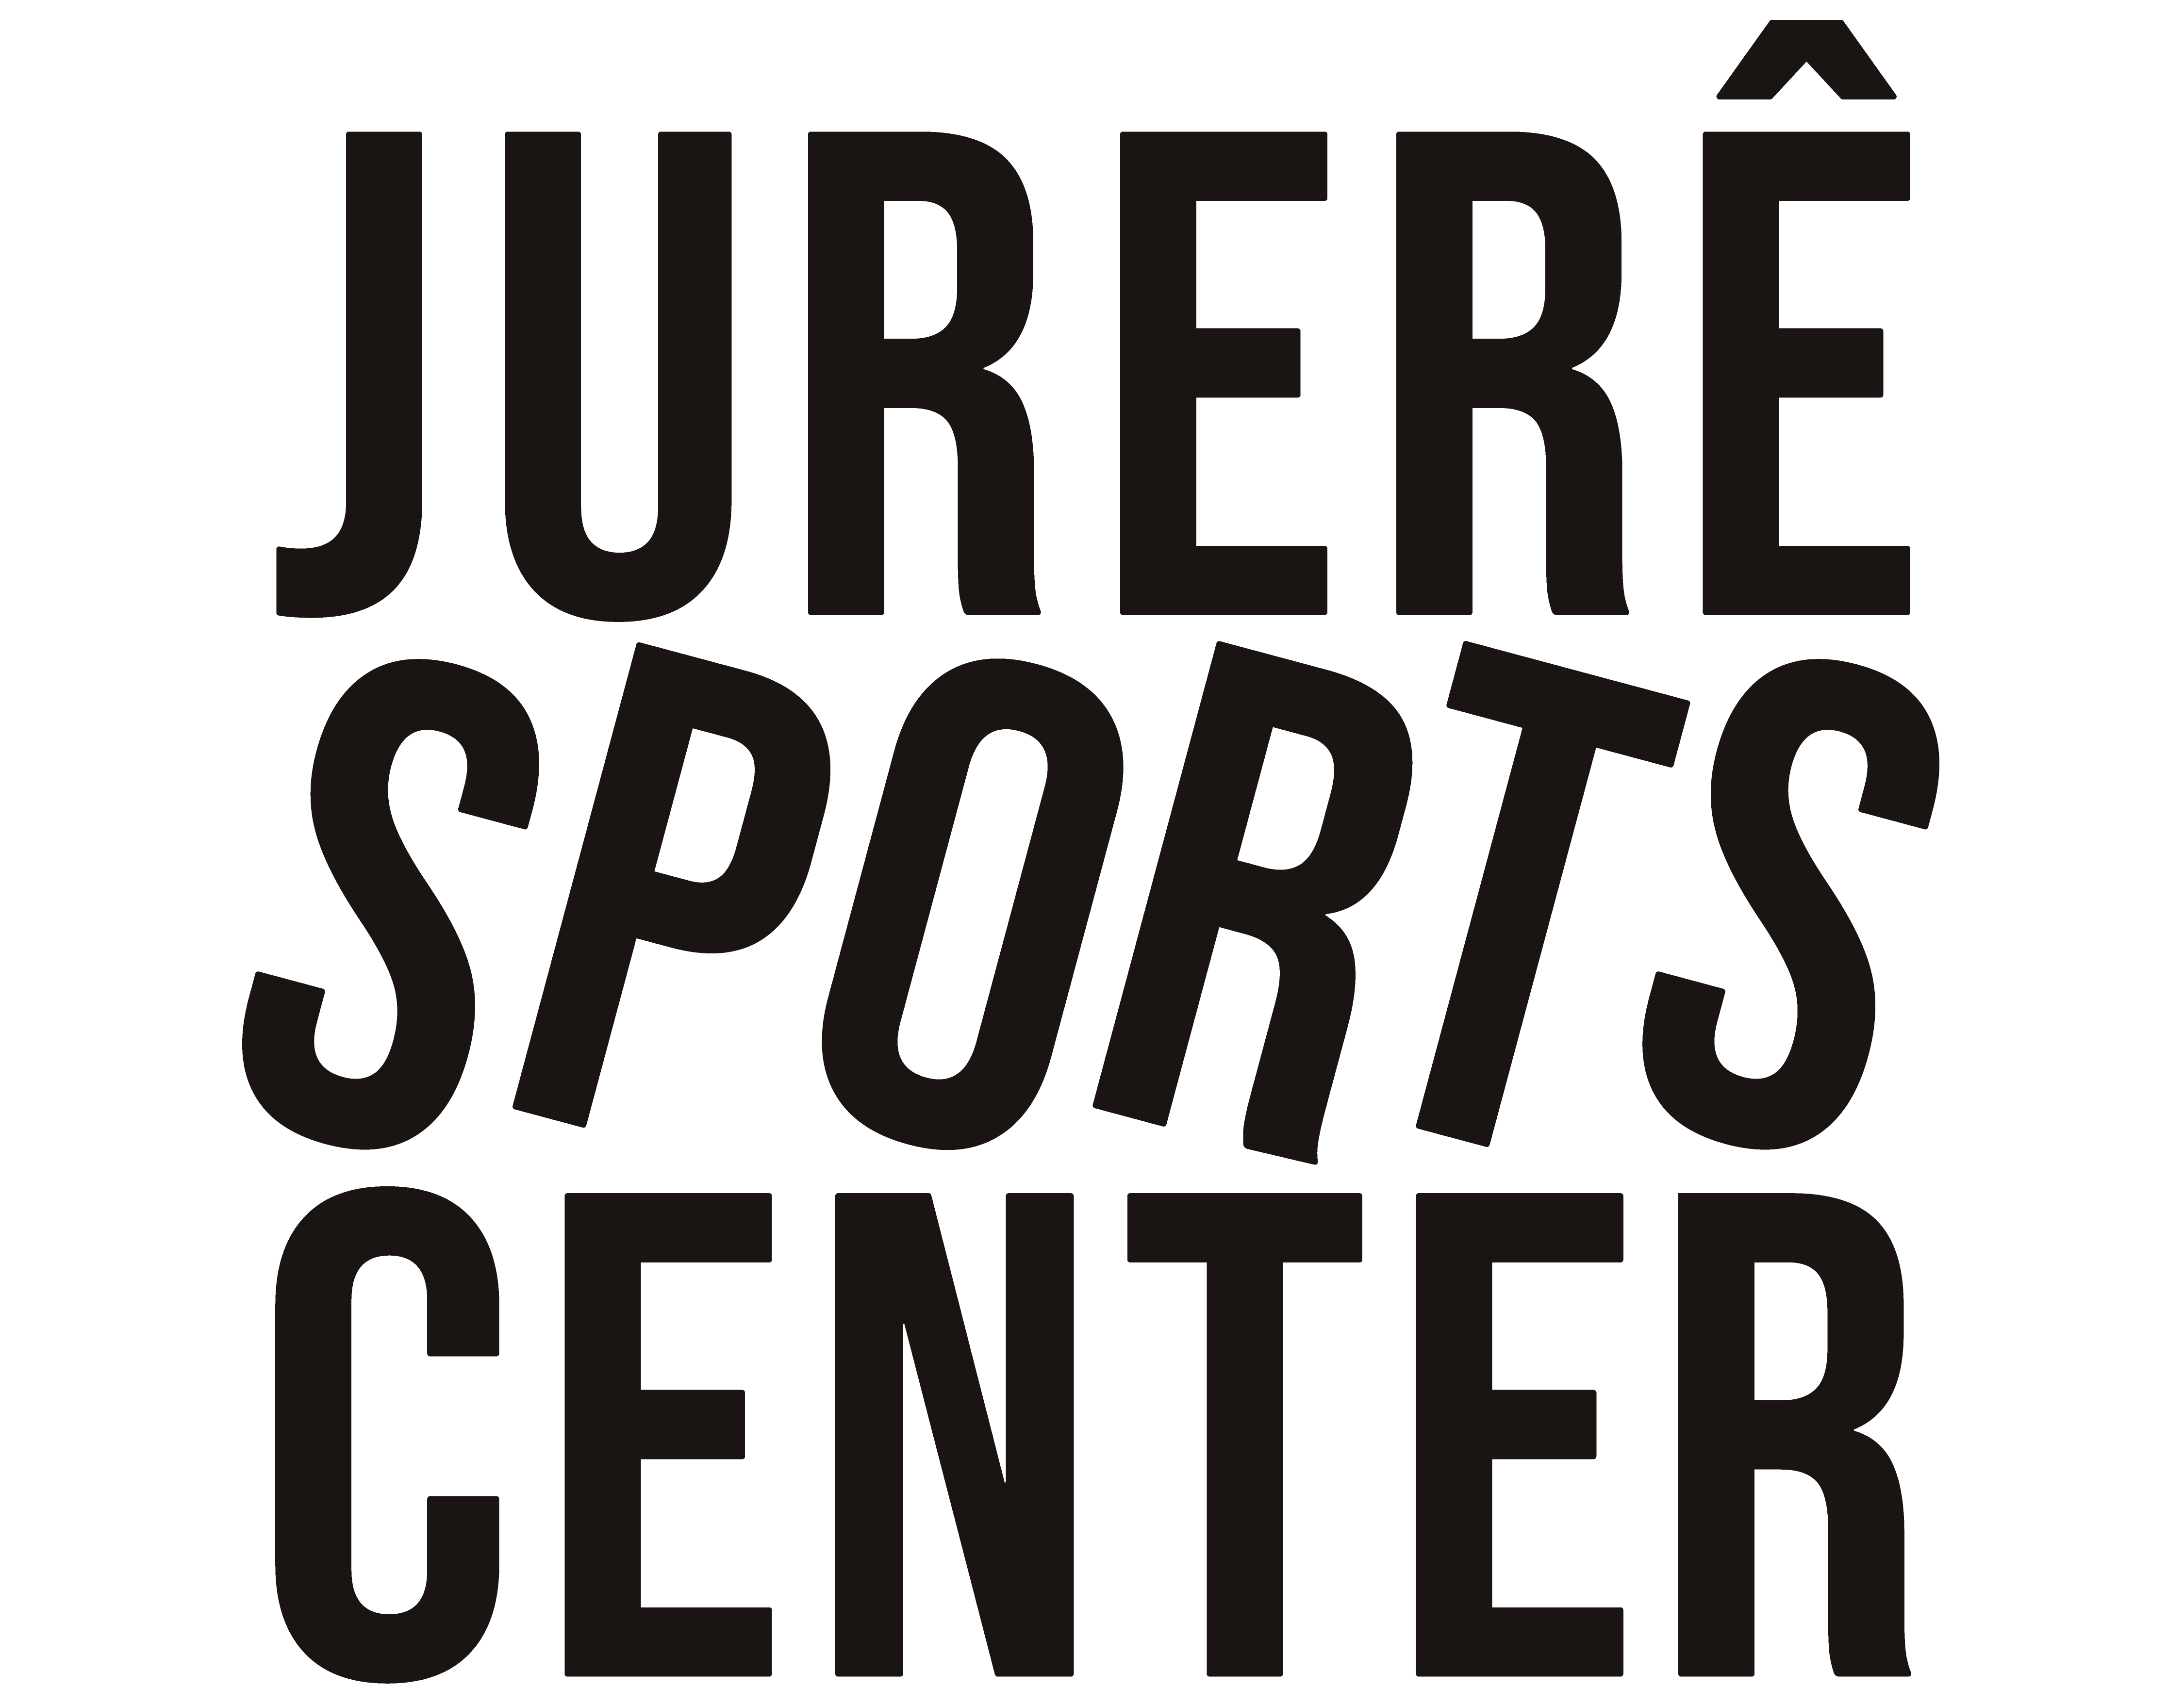 (c) Jureresportscenter.com.br